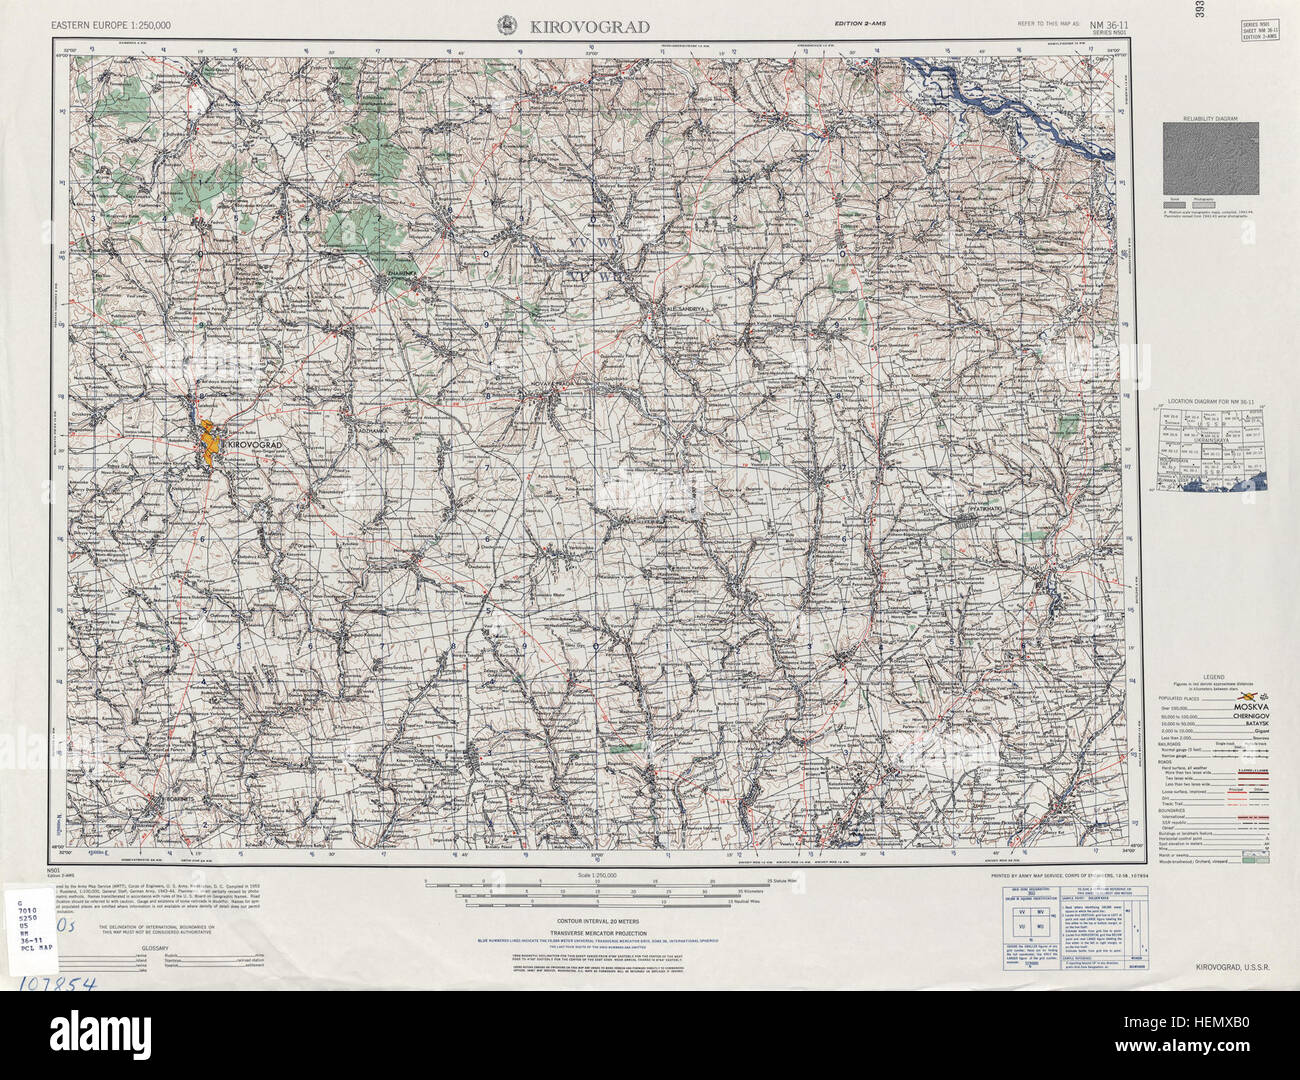 USSR map NM 36-11 Kirovograd Stock Photo